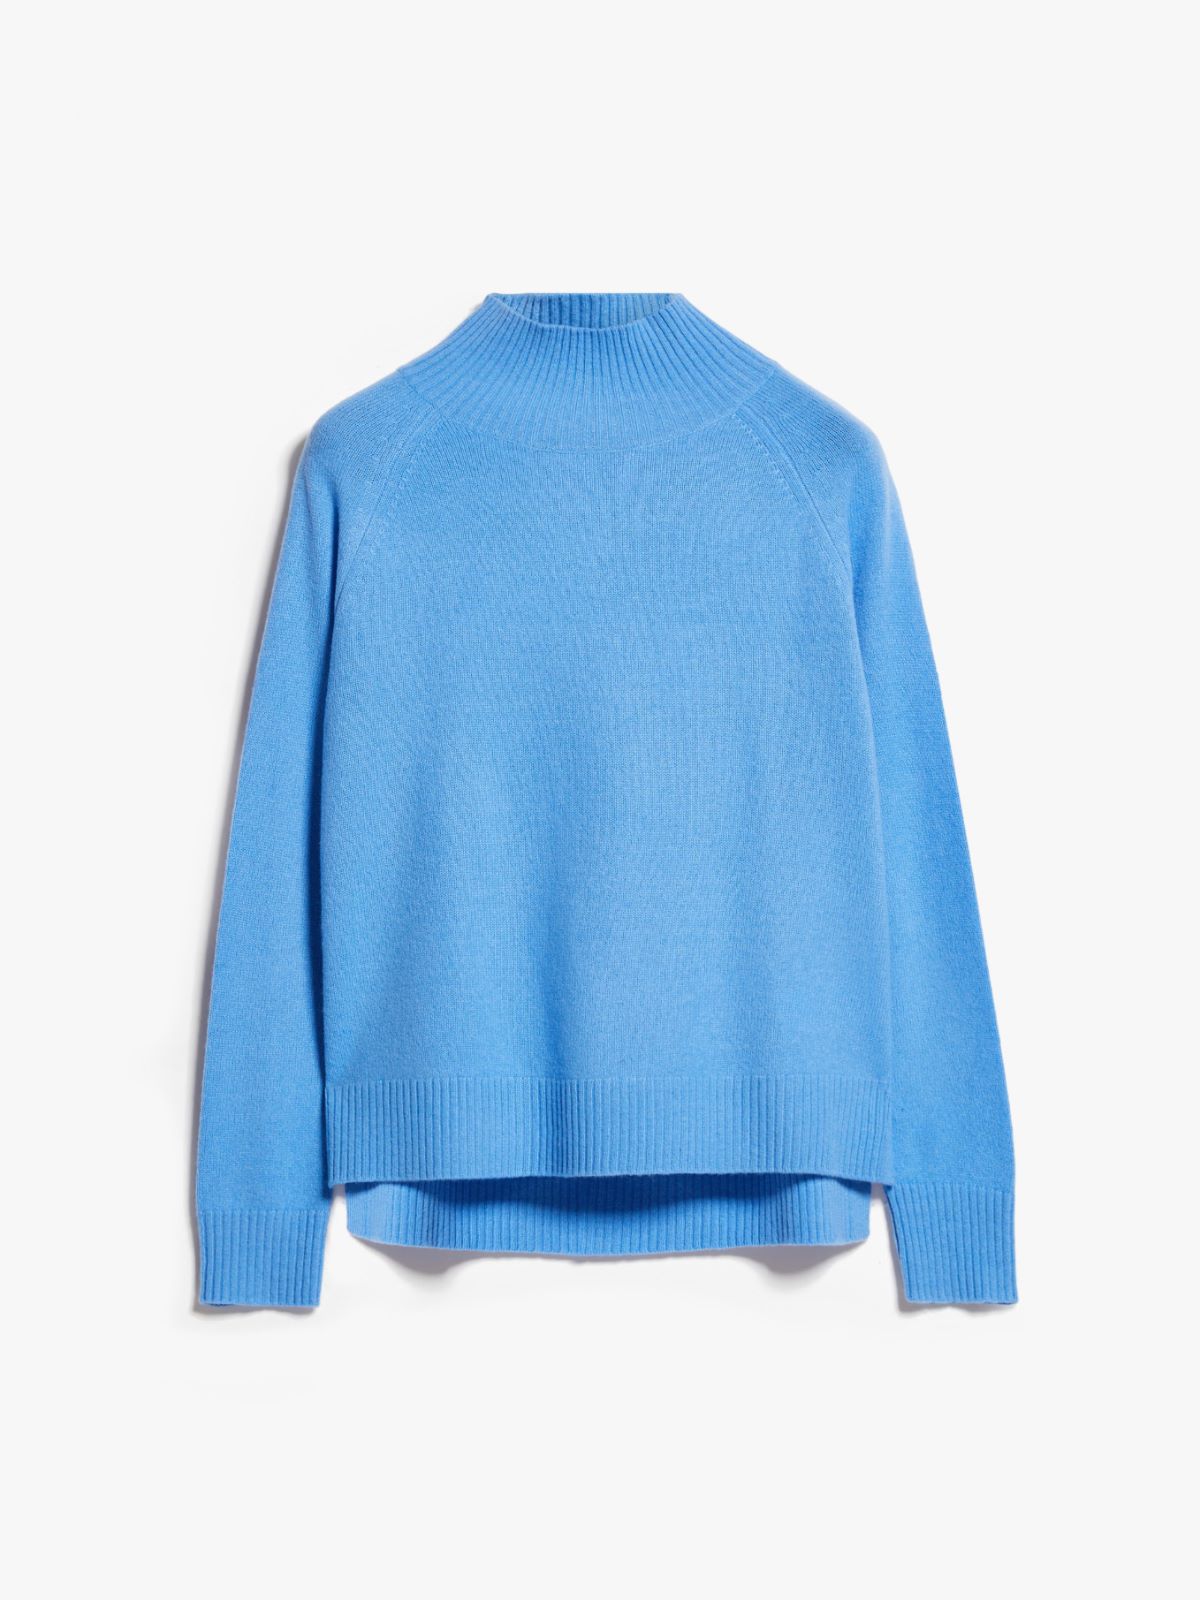 Cashmere sweater - LIGHT BLUE - Weekend Max Mara - 6